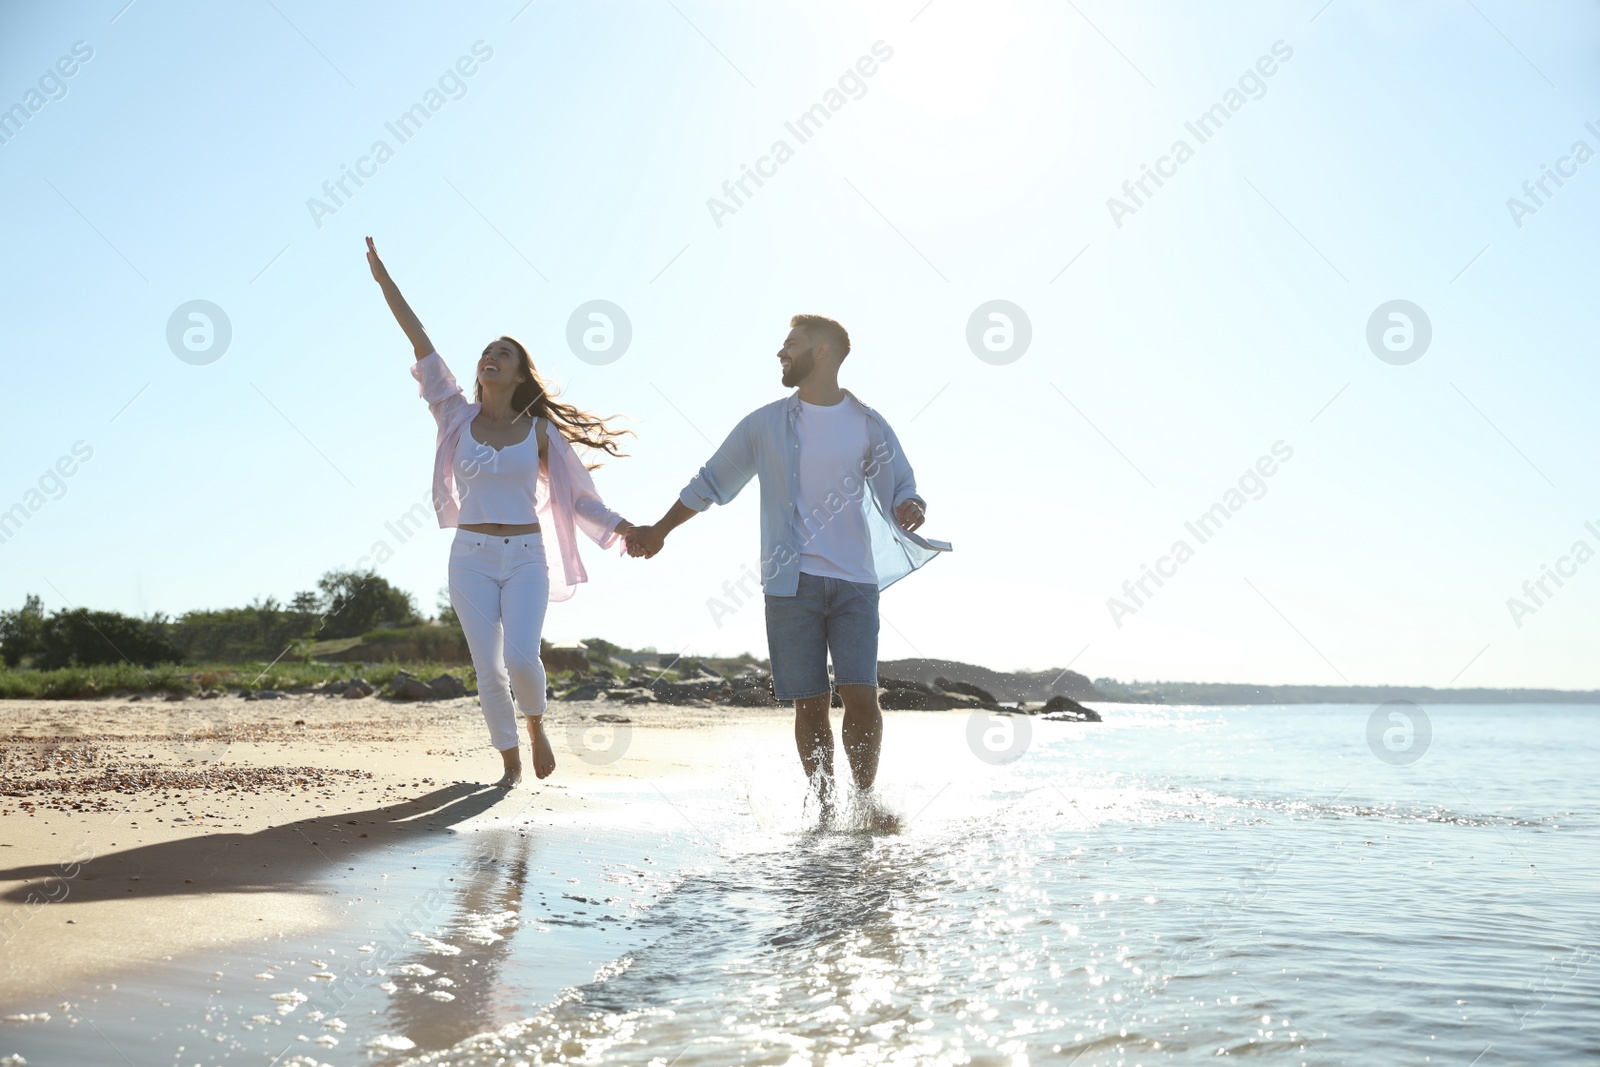 Photo of Happy young couple on beach near sea. Honeymoon trip